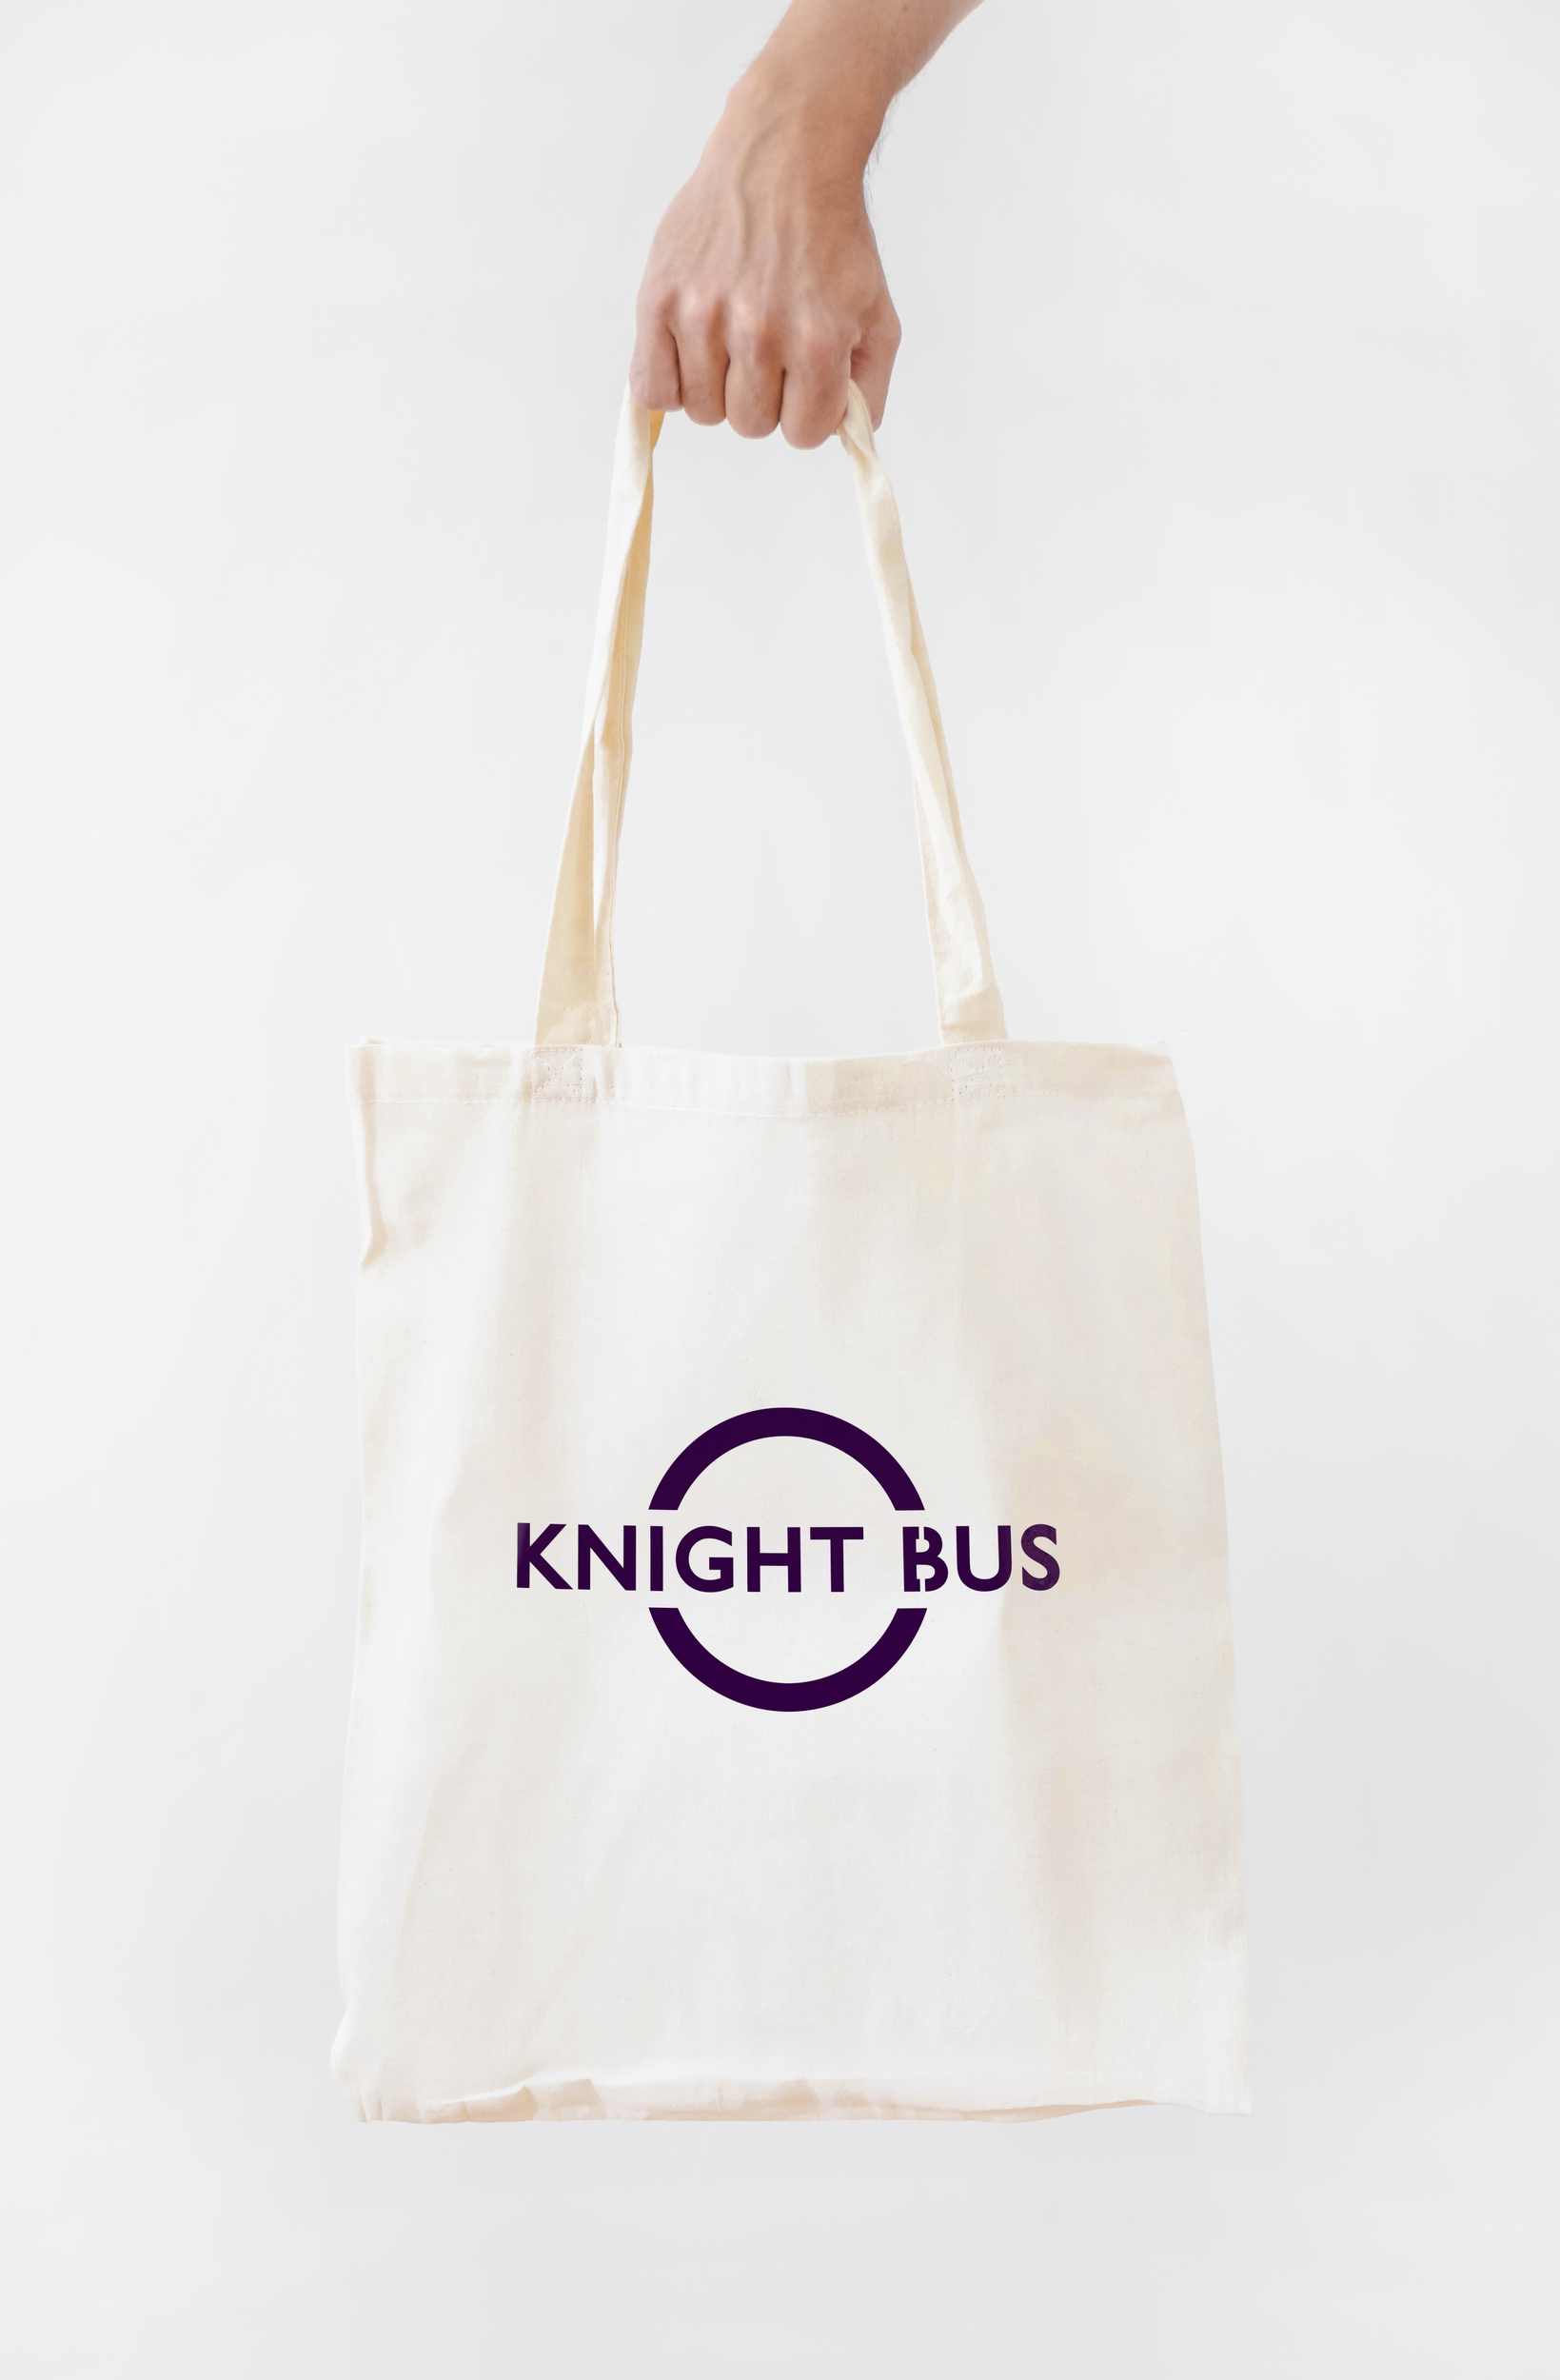 knight bus